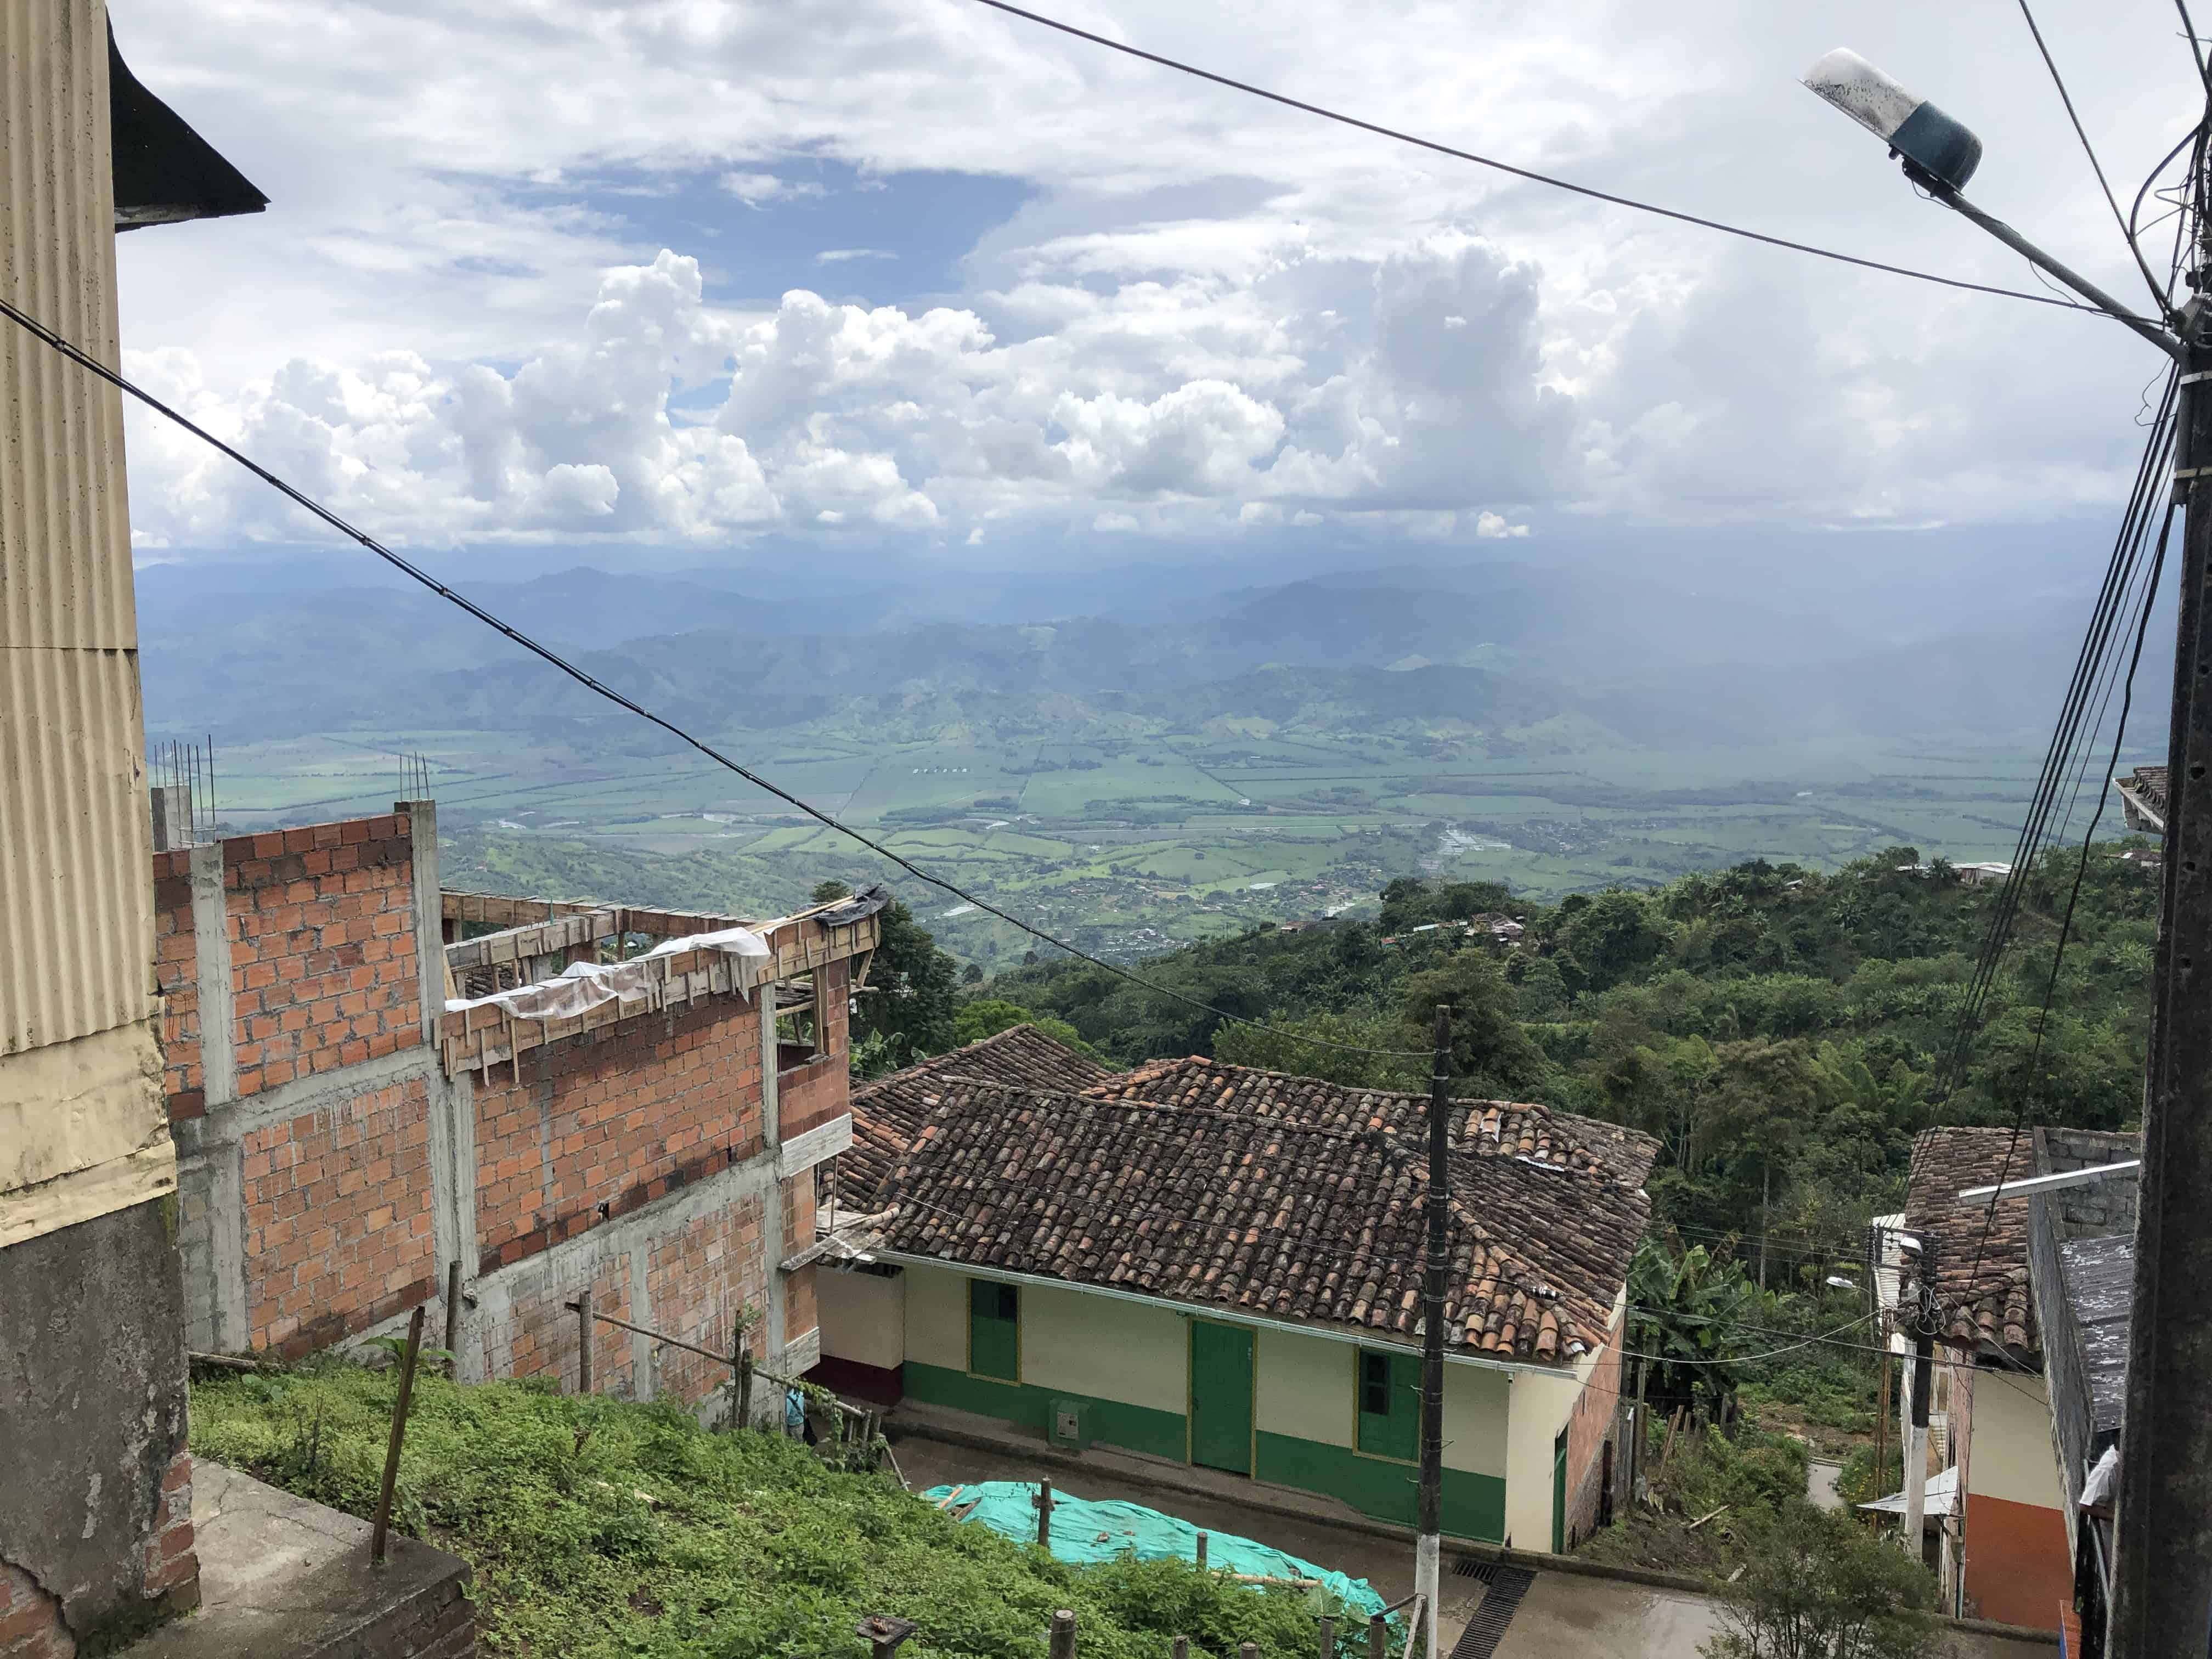 View from a side street in Belalcázar, Caldas, Colombia